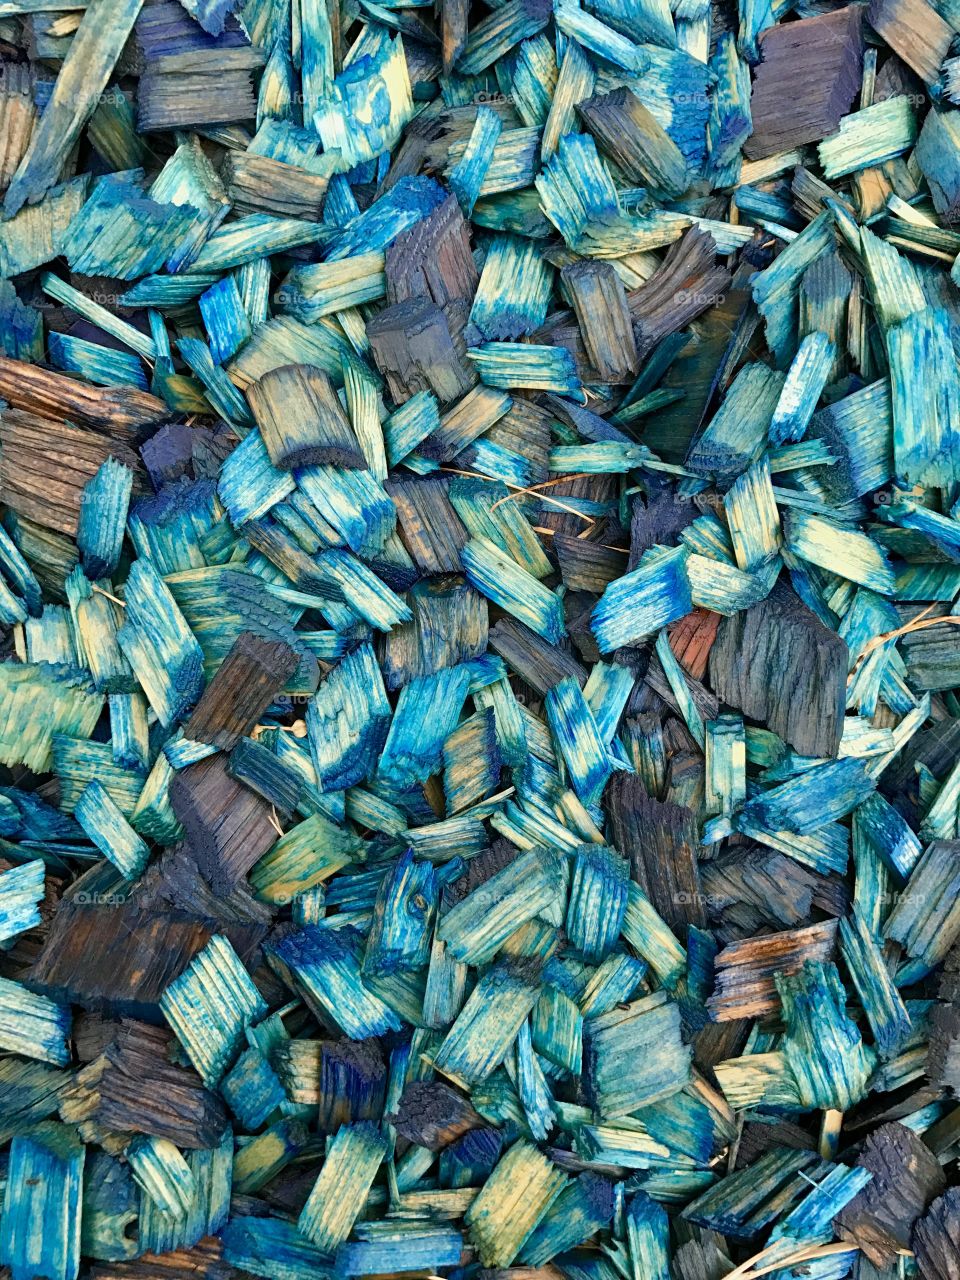 Abundance of blue wooden pieces